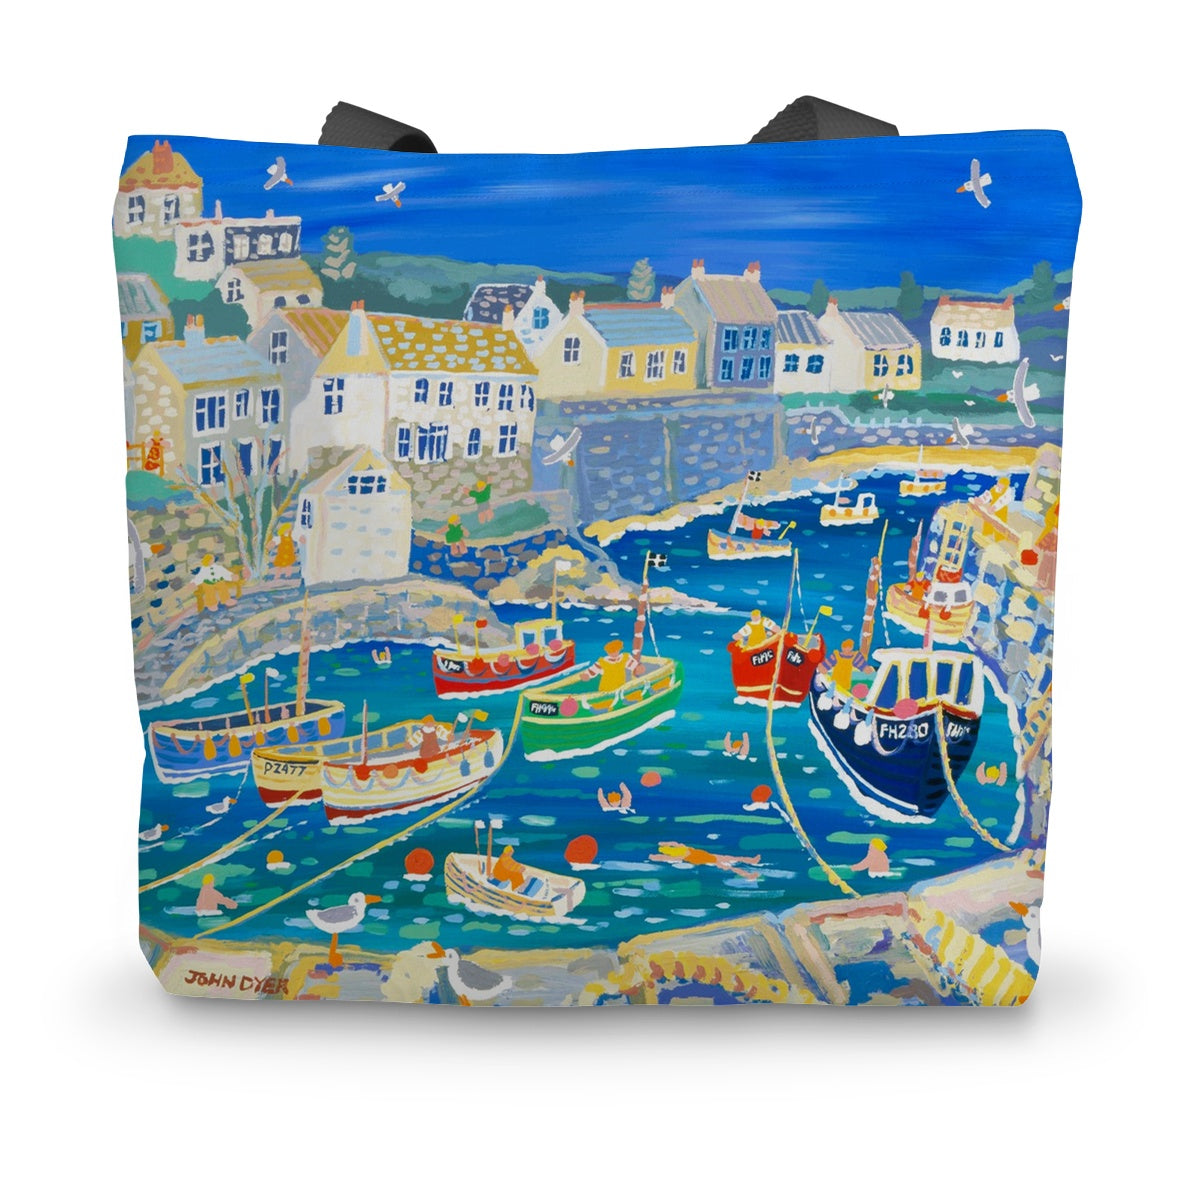 John Dyer Art. Canvas Colourful Tote Bag. Coverack, Cornwall.